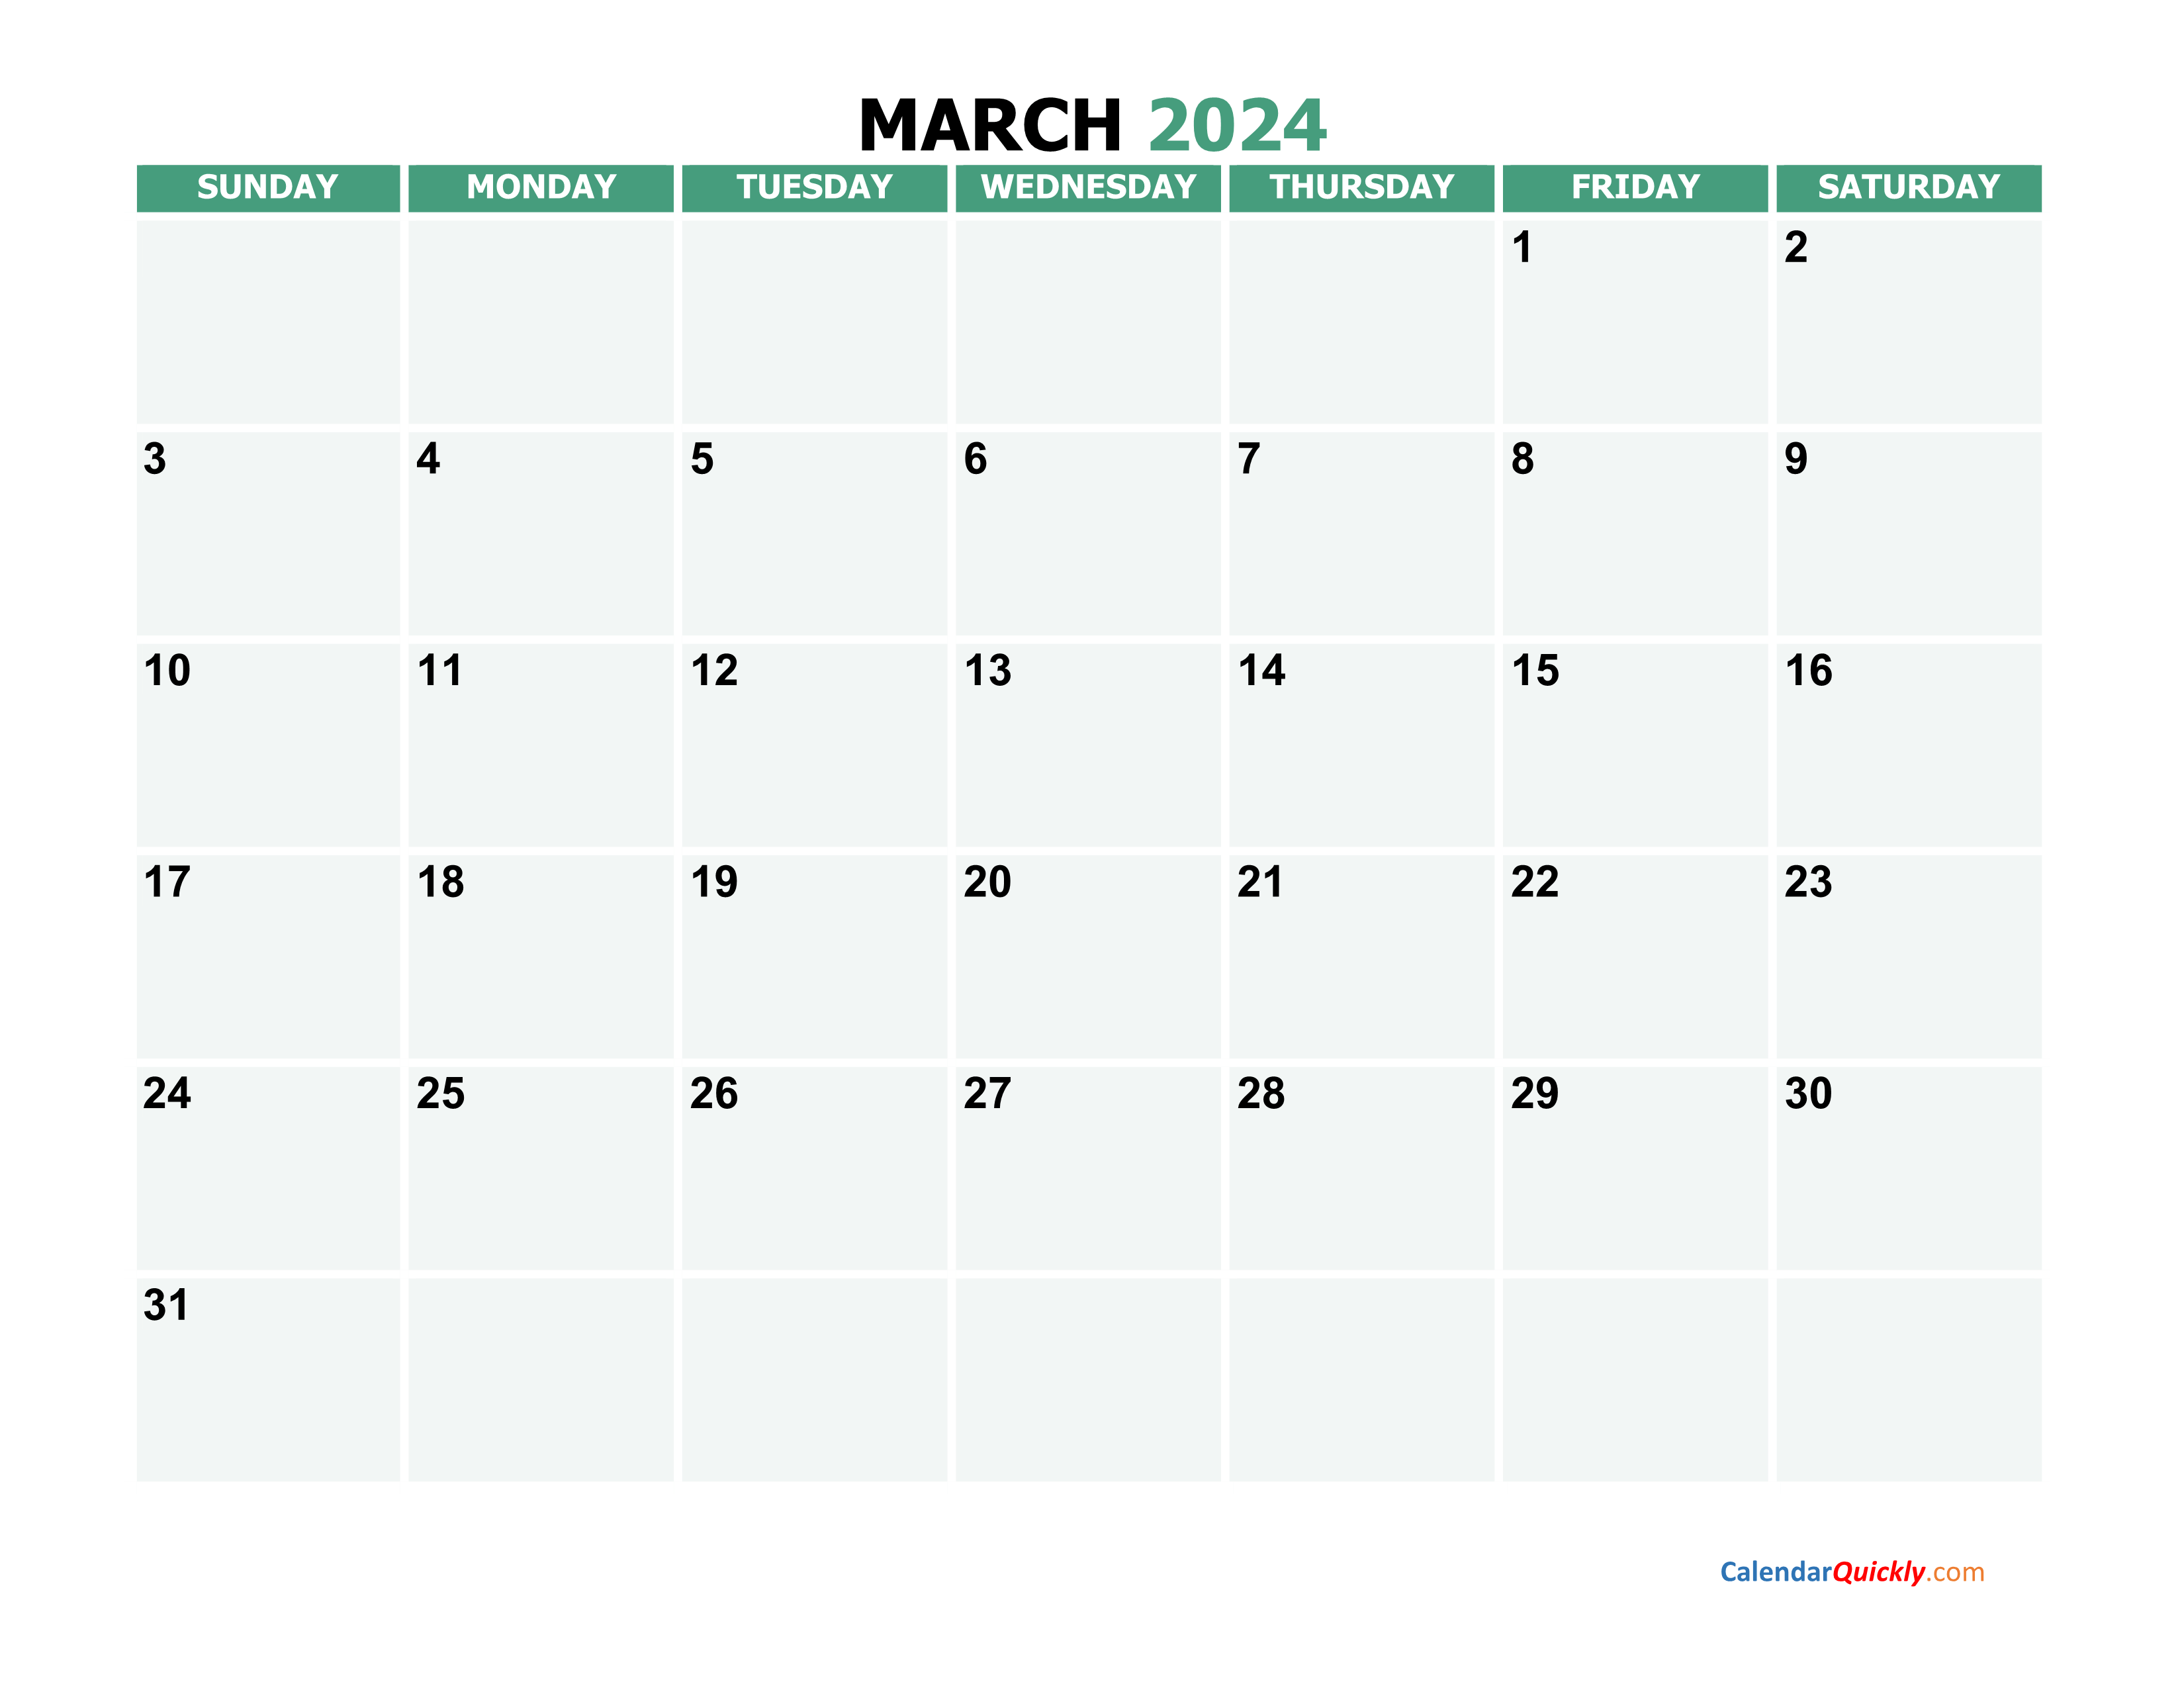 march-calendar-2023-vertical-calendar-quickly